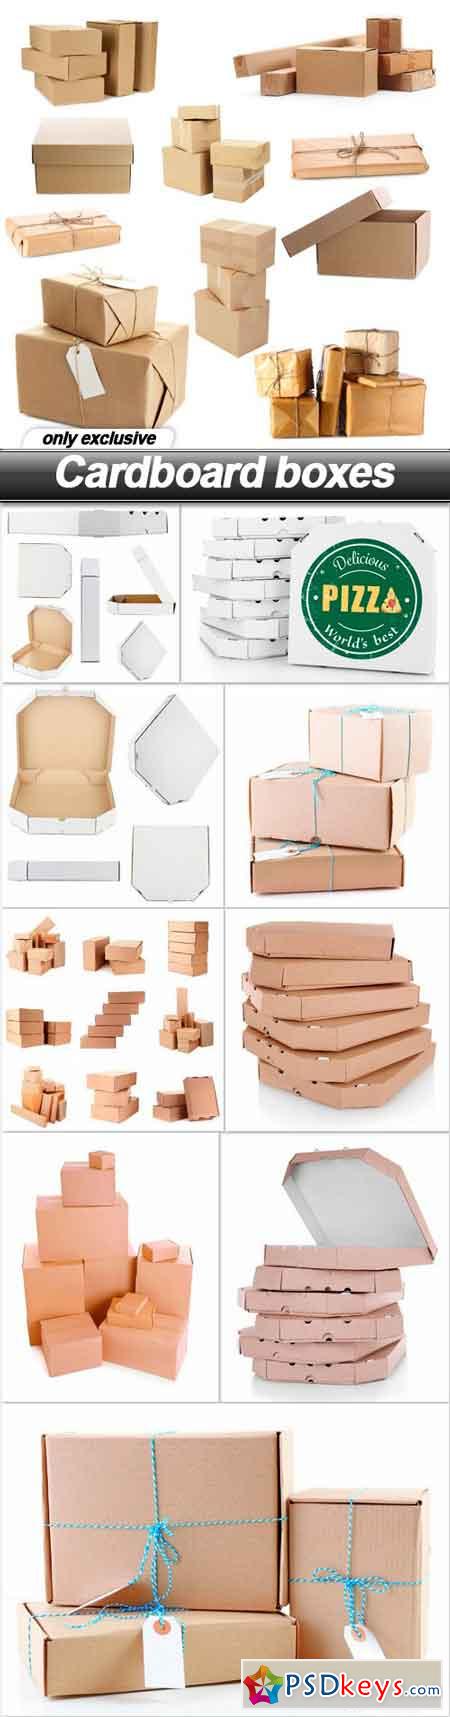 Cardboard boxes - 10 UHQ JPEG